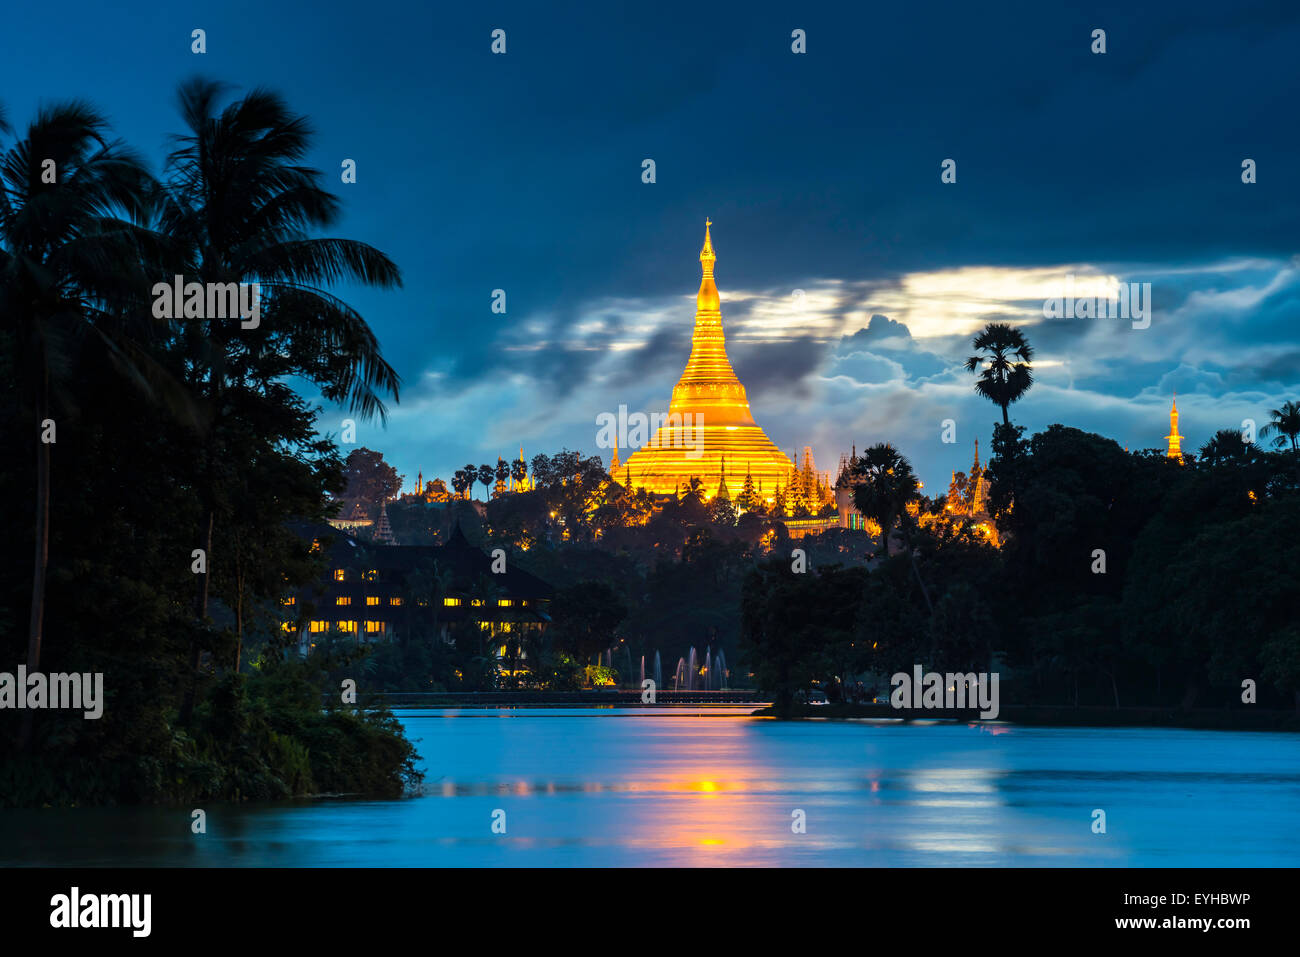 Golden stupa principale al crepuscolo, chedi, Shwedagon pagoda, Lago Kandawgyi, Kandawgyi Natura Park, Yangon o Rangoon, Regione di Yangon Foto Stock